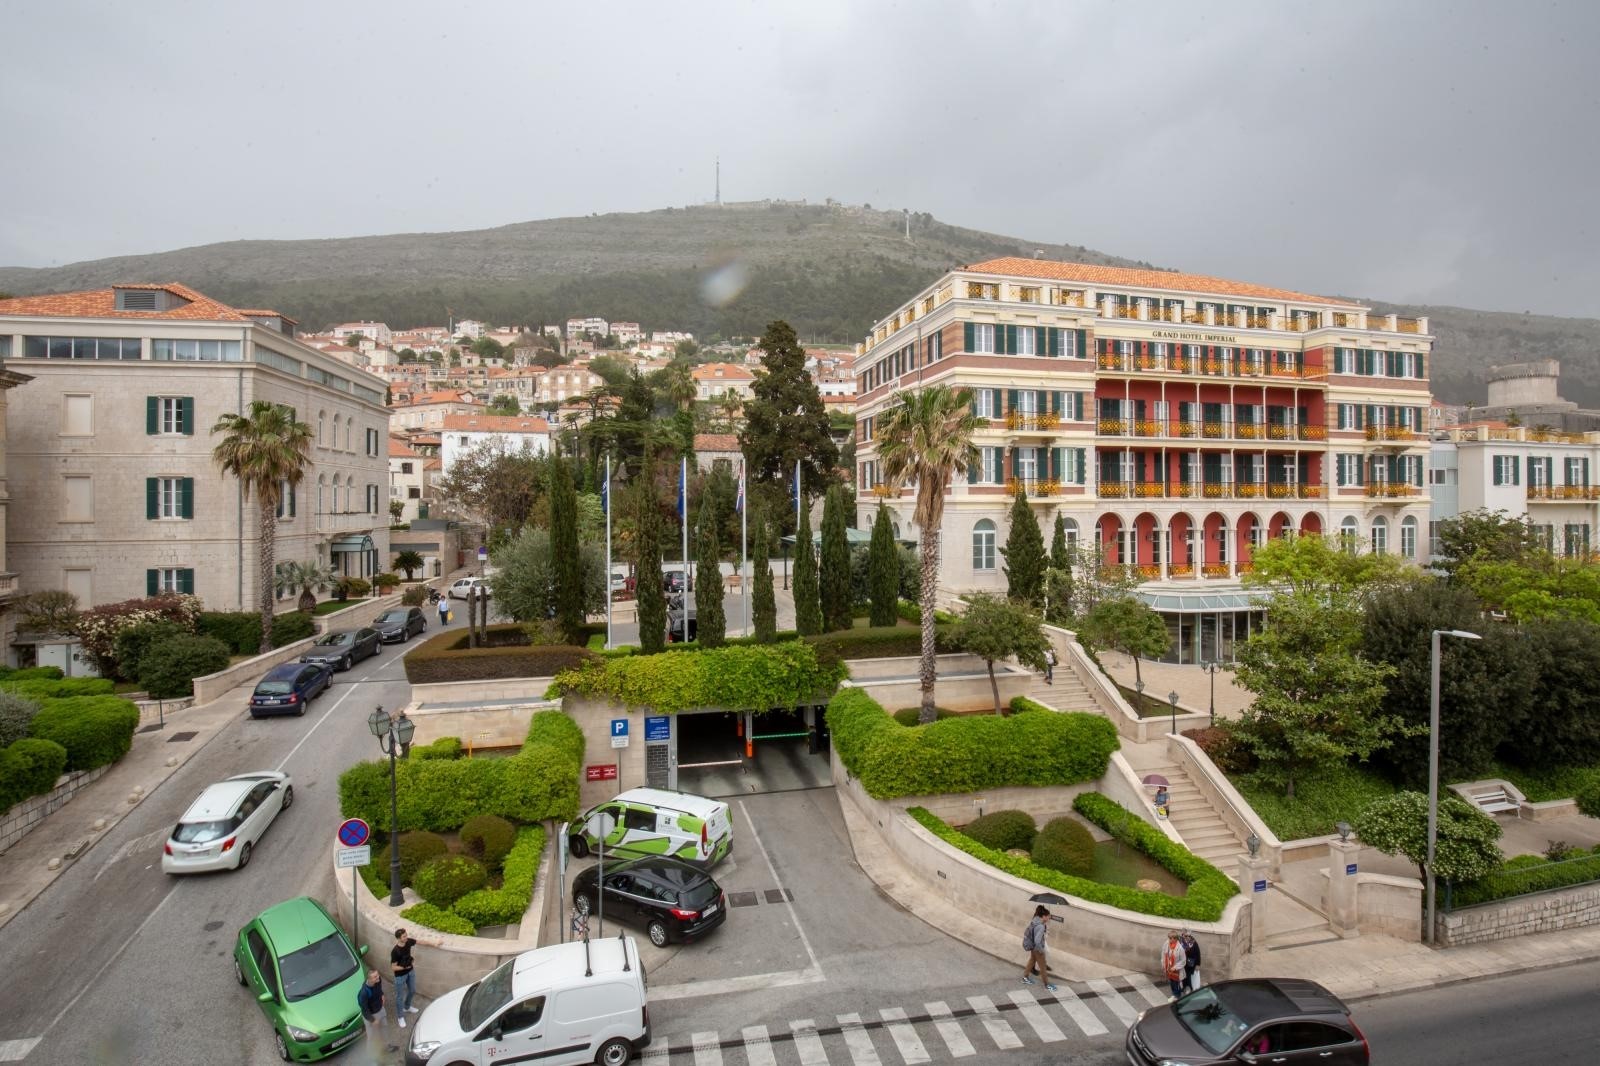 17.04.2018., Pile, Dubrovnik - Hotel Hilton Imperial poceo s radom nakon obnove.
Photo: Grgo Jelavic/PIXSELL